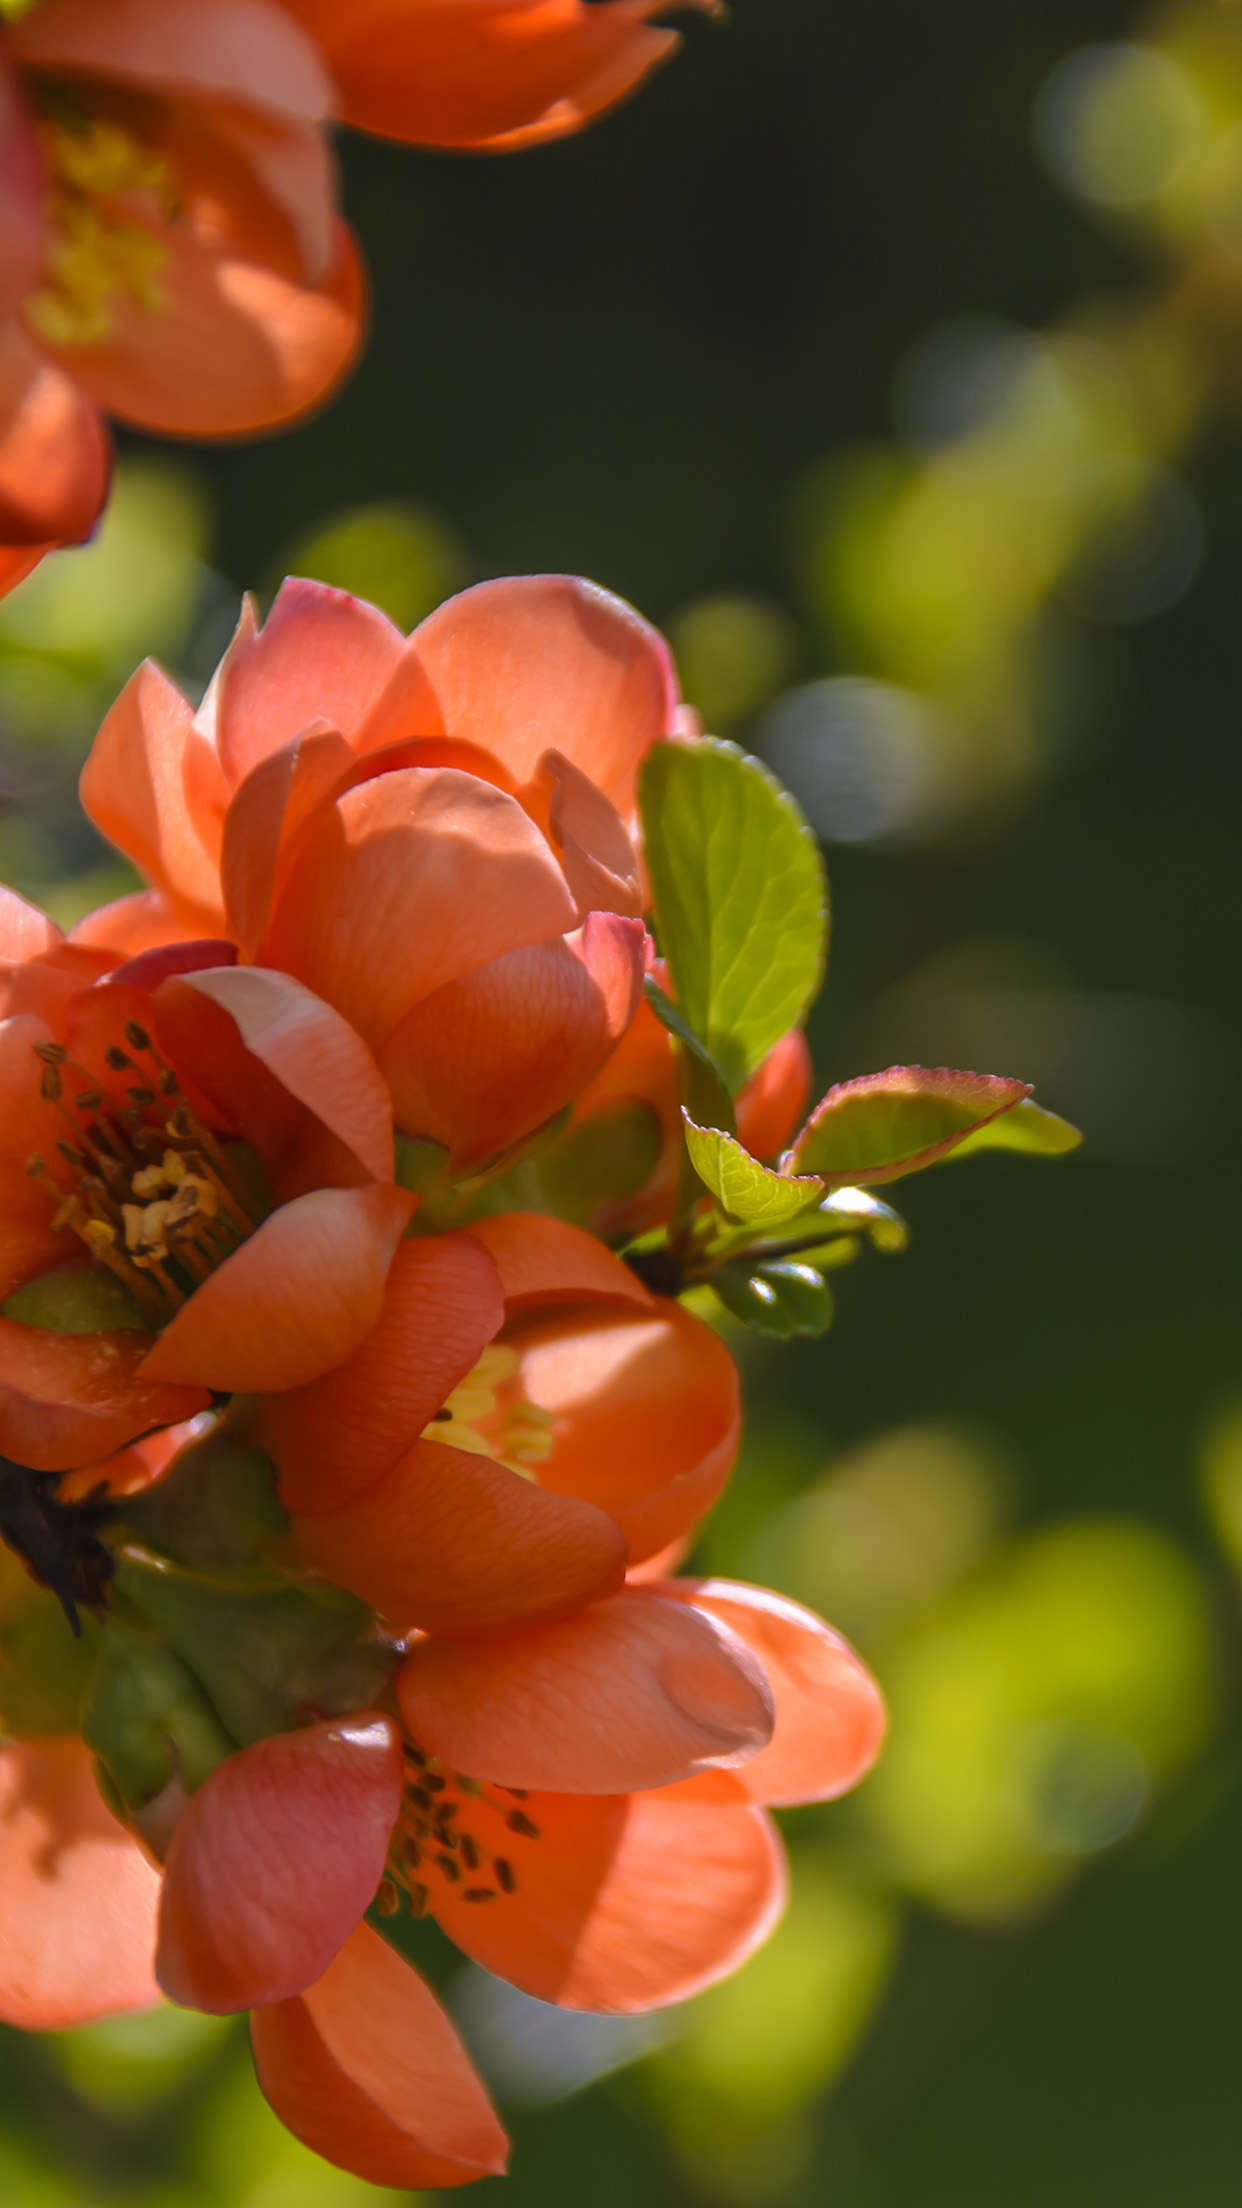 iPhone X wallpaper. spring flower tree orange nature